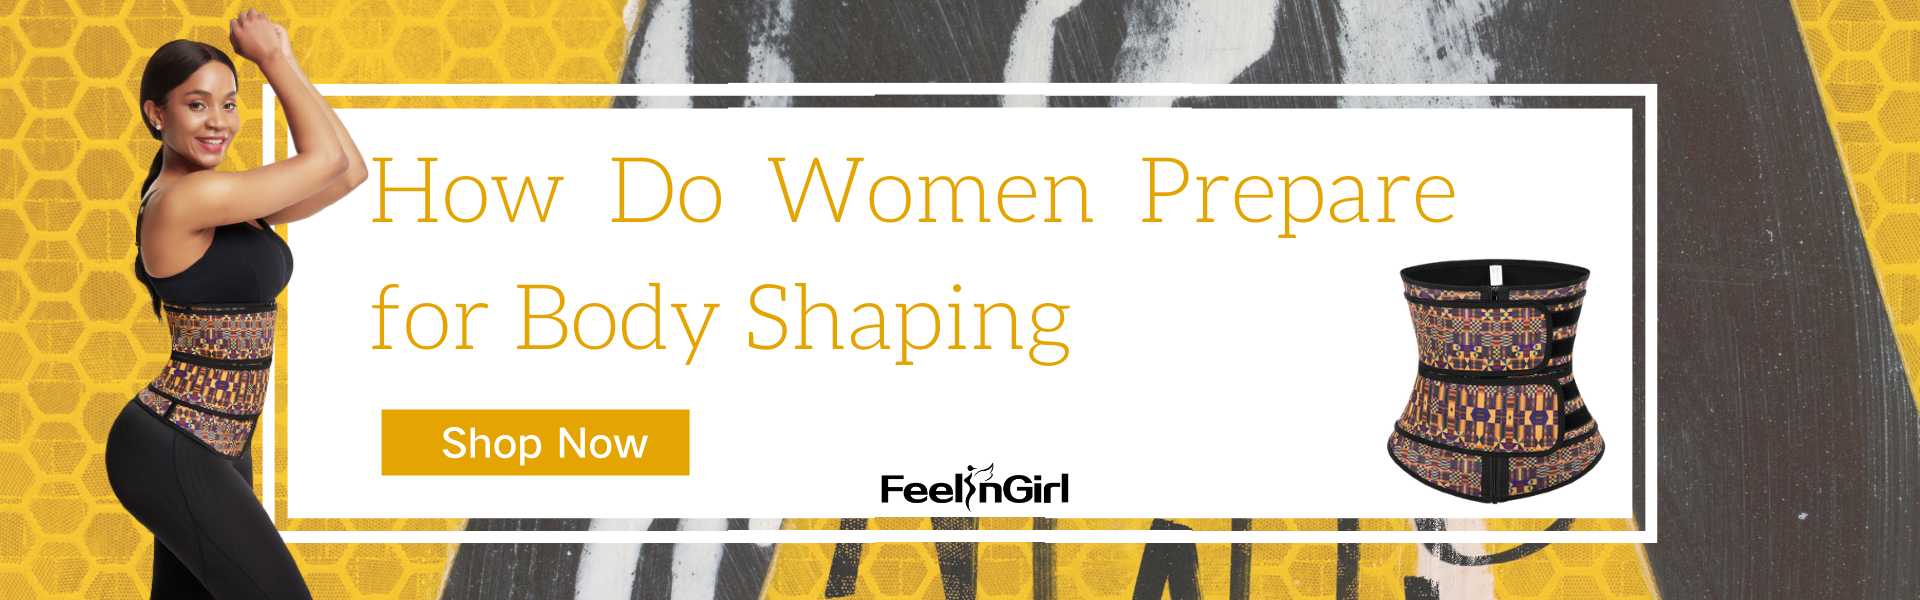 How Do Women Prepare for Body Shaping